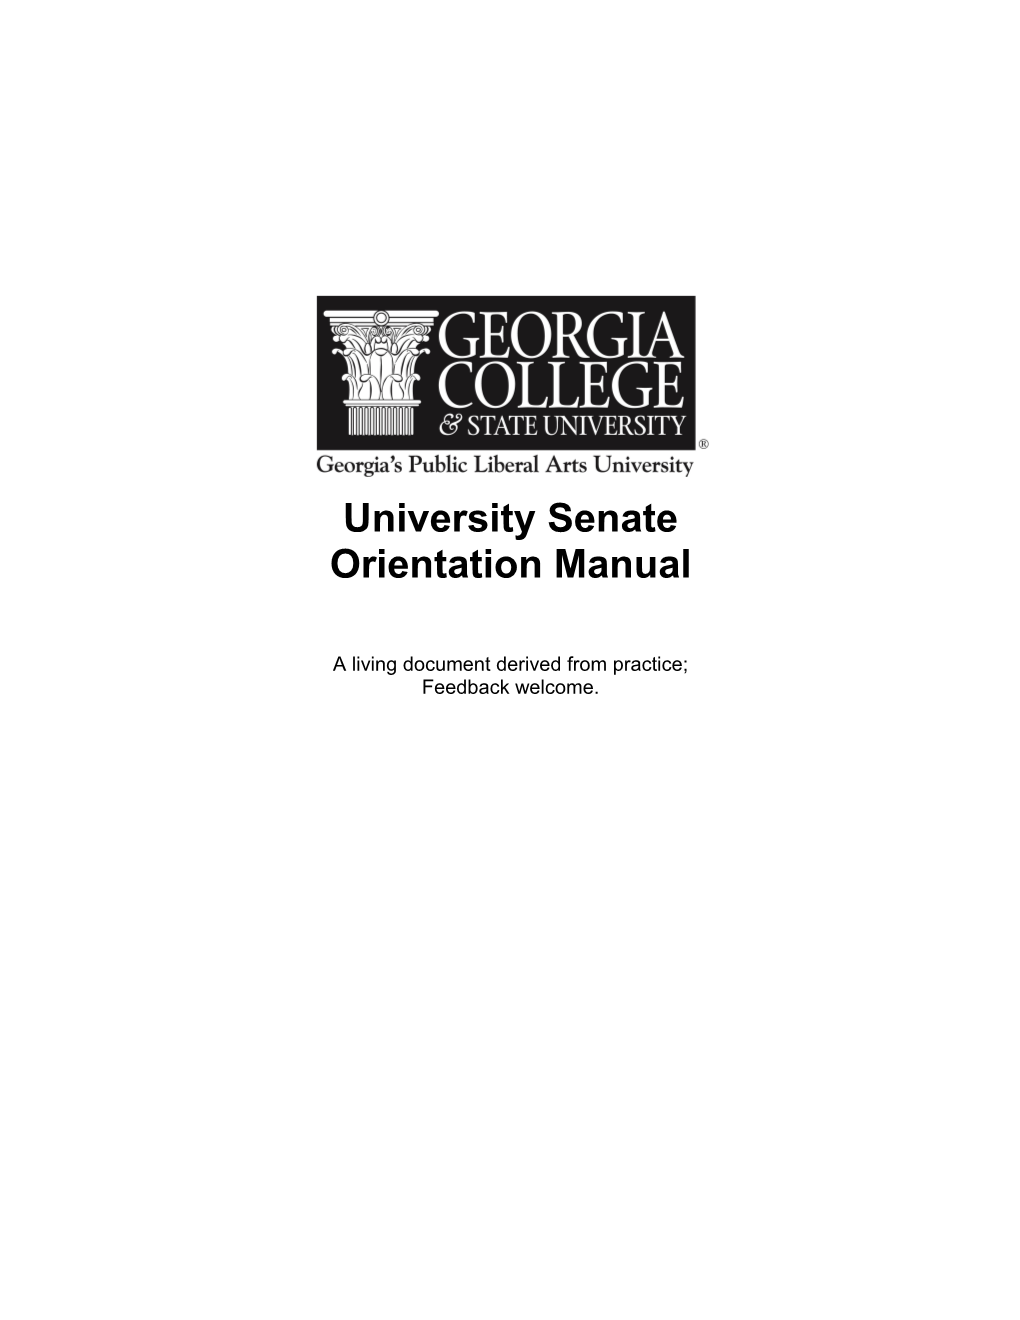 University Senate Orientation Manual